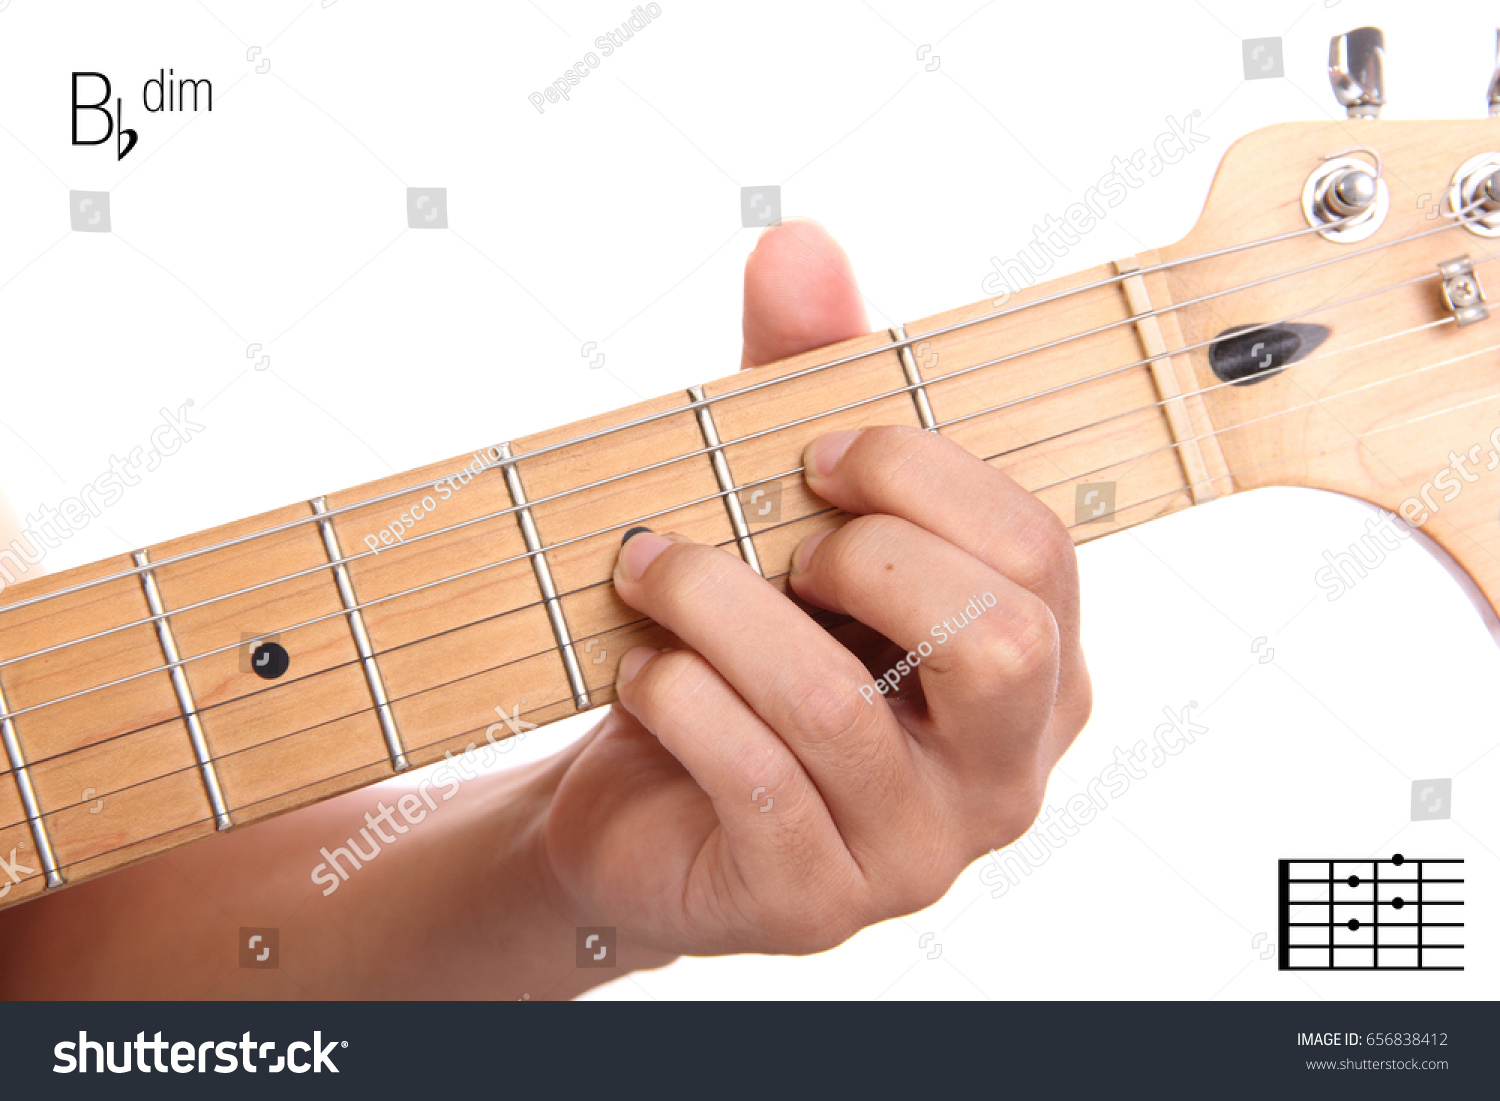 Bbdim Guitar